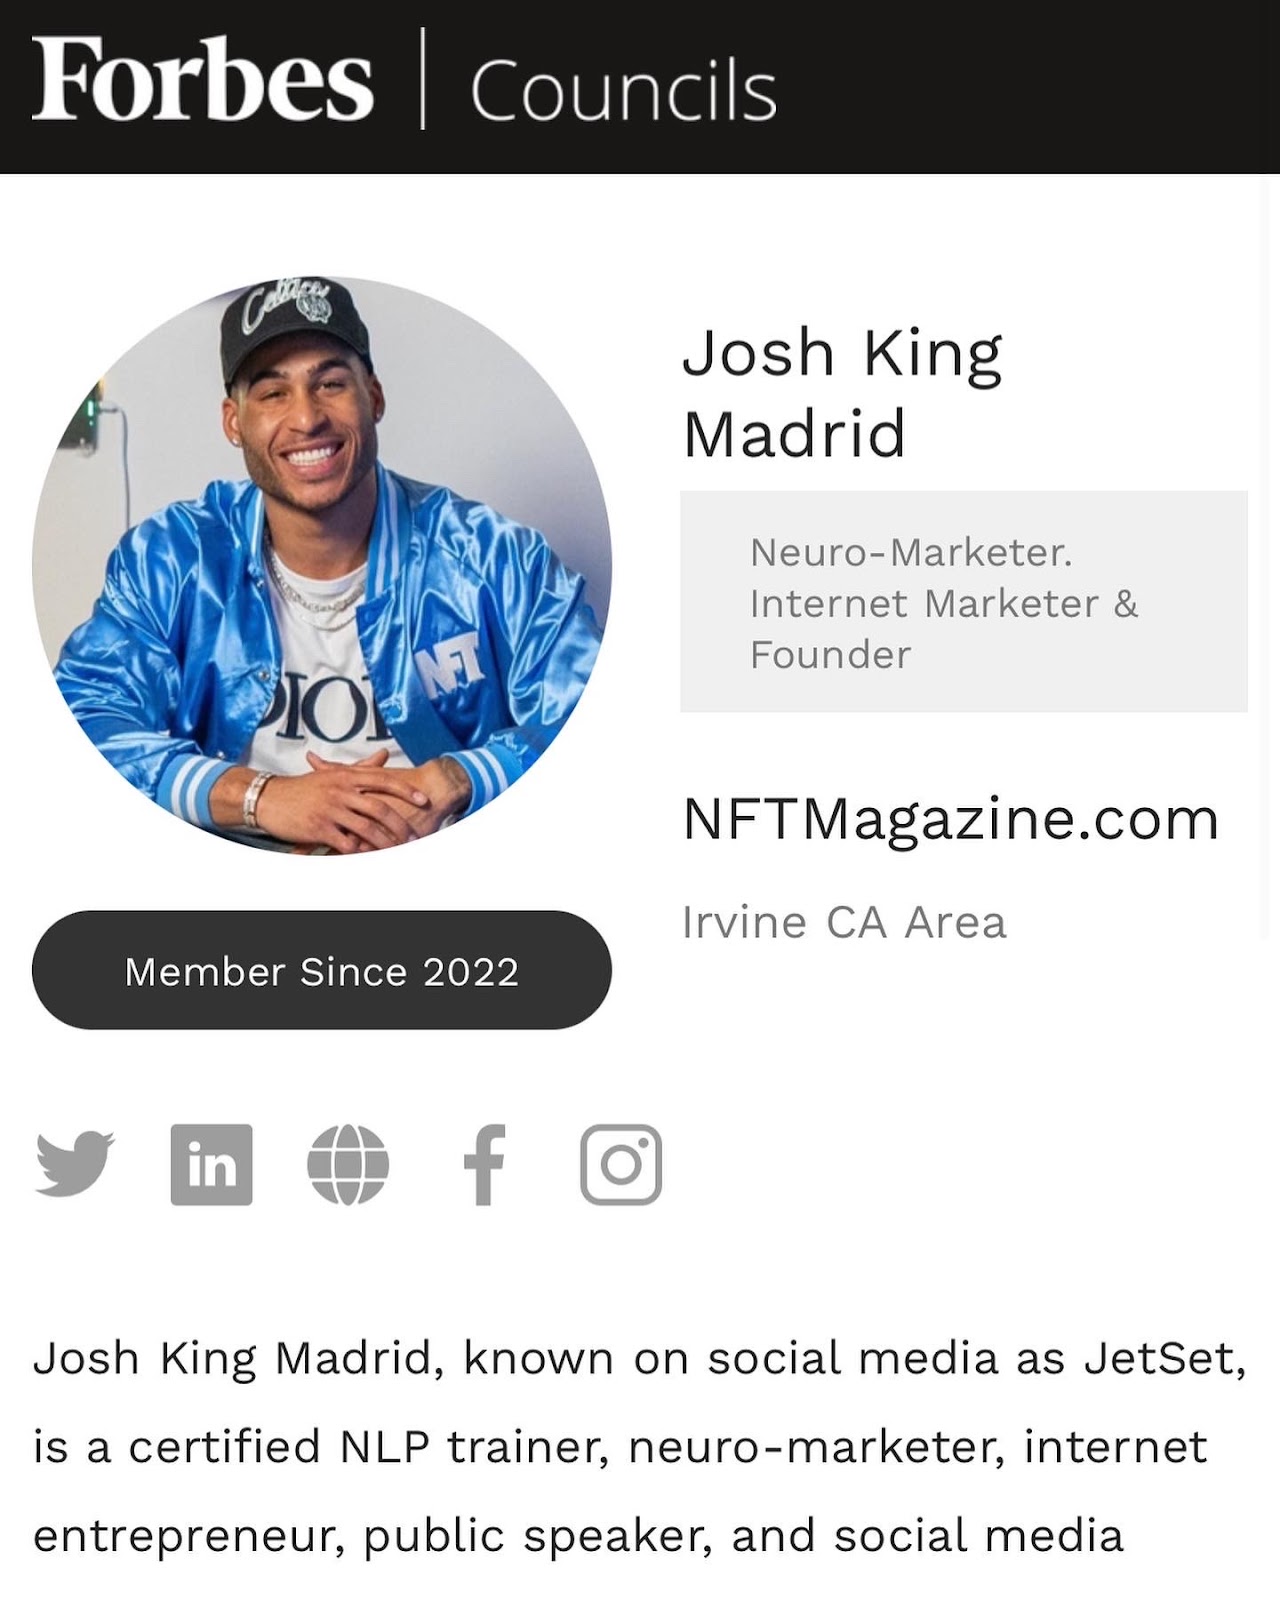 He has sold over $20 million online. Josh King Madrid (JetSet) is a council & executive board member for Forbes.com, Entrepreneur.com, FastCompany.com and RollingStone.com. 

Josh JetSet Madrid, Author, Internet Celebrity, Entrepreneur, Wikipedia